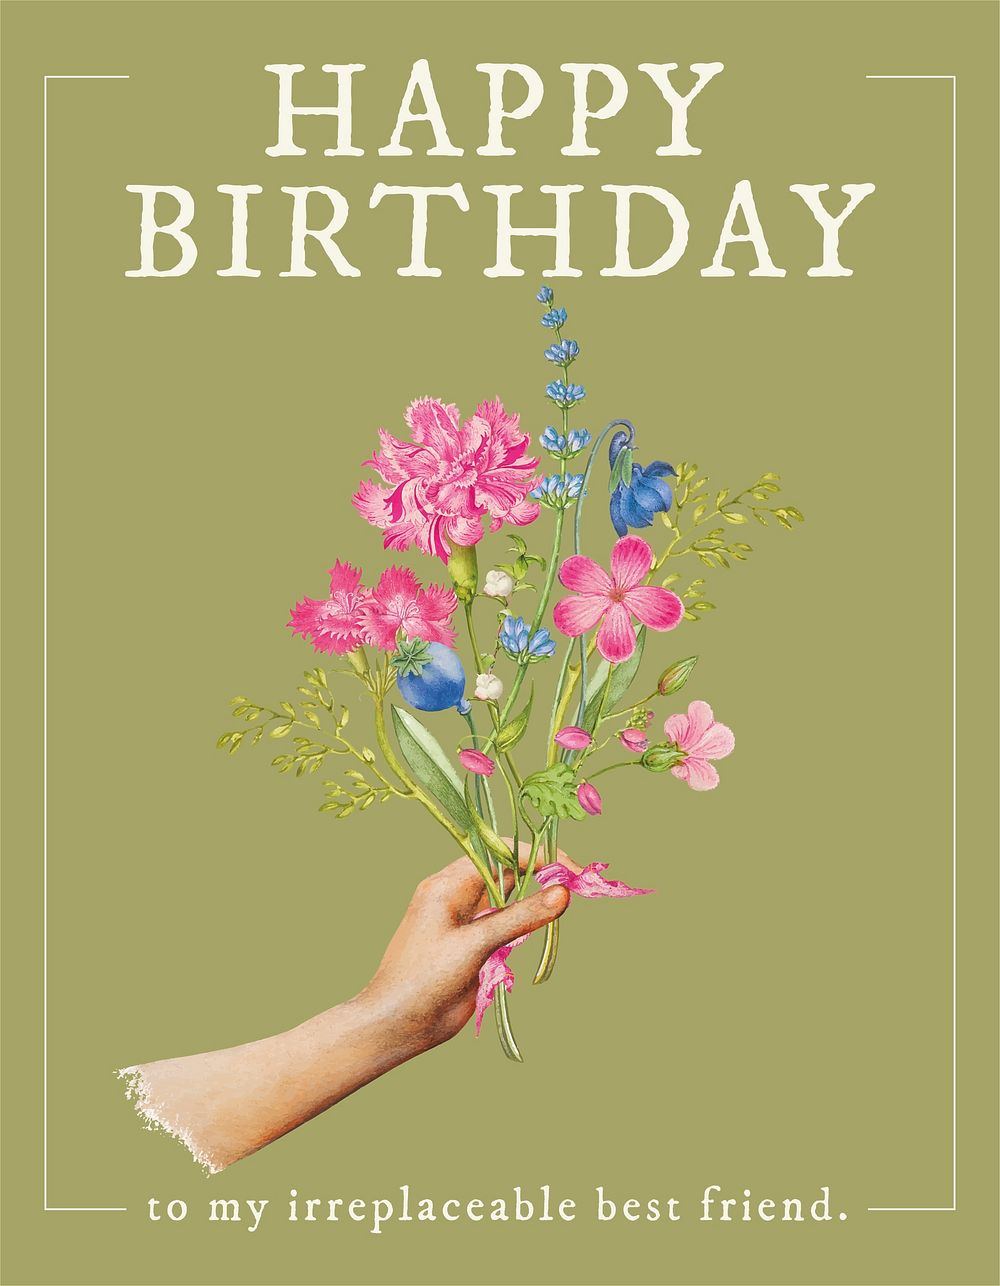 Vintage flower flyer template, birthday greeting card vector